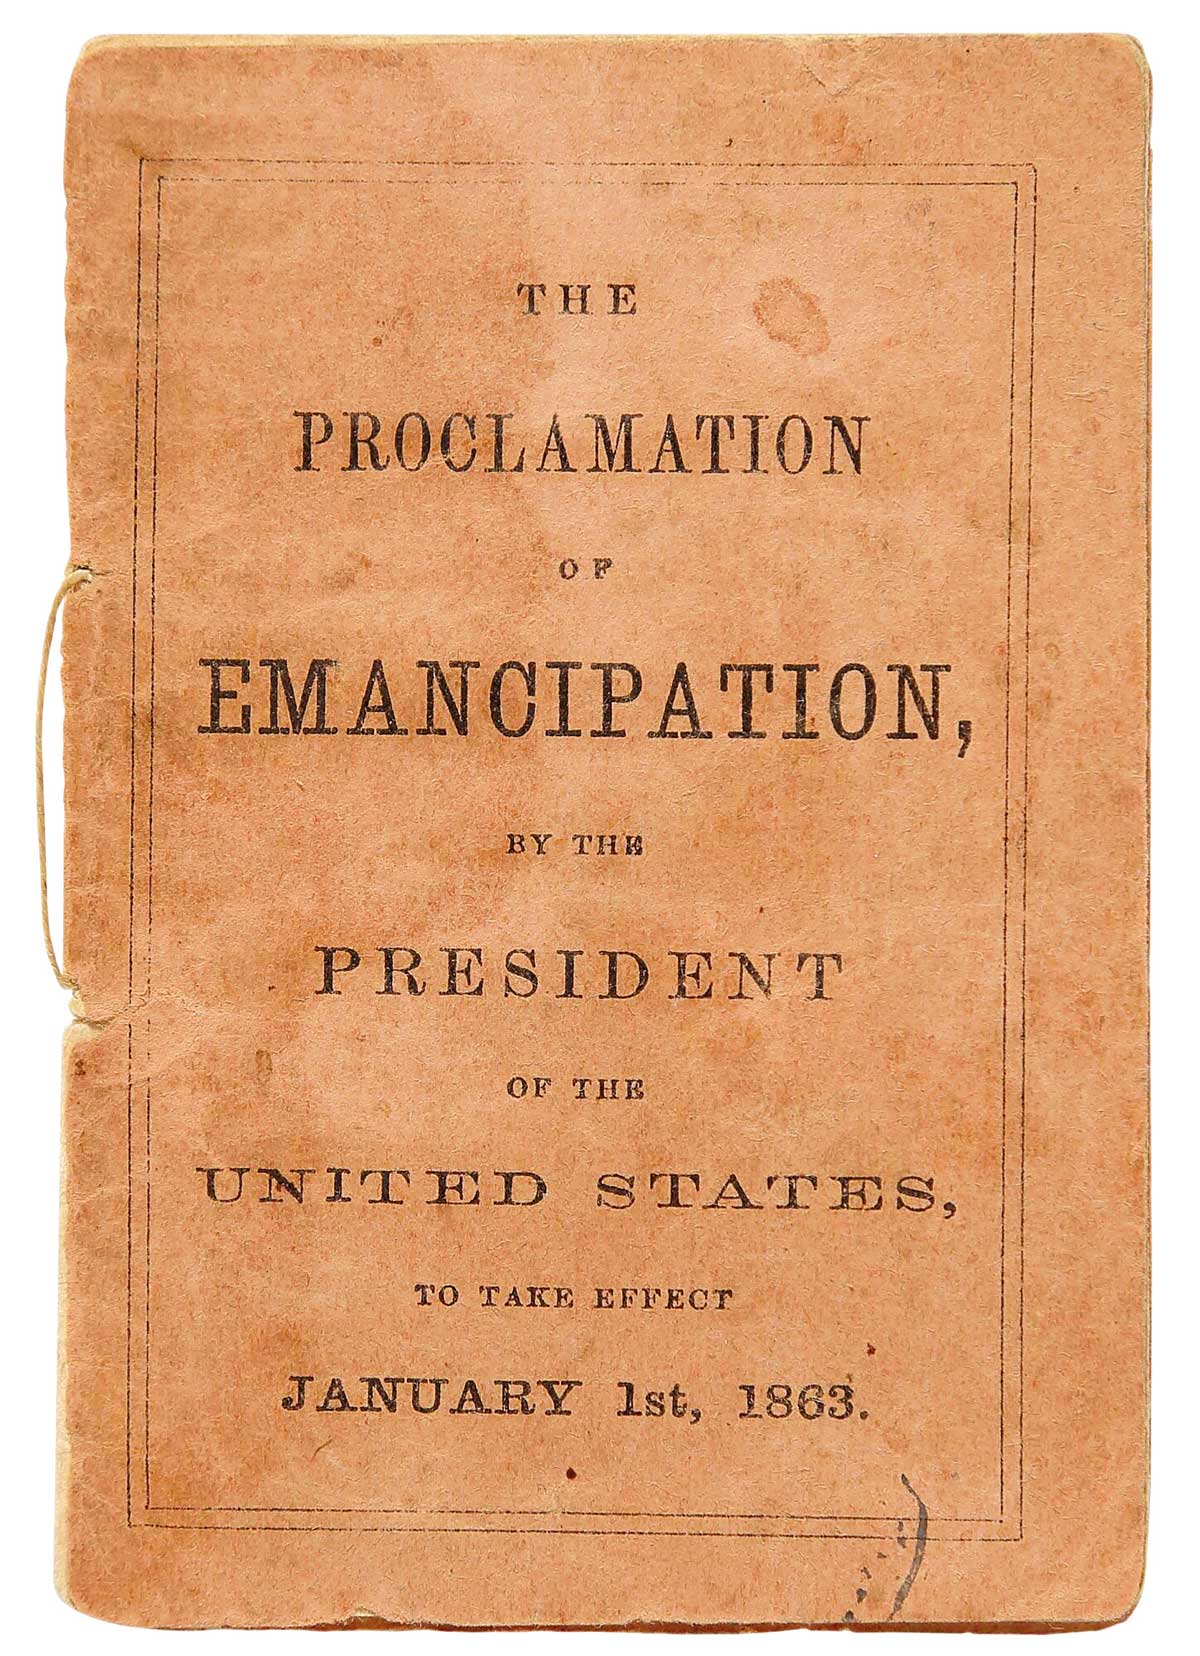 The Proclamation of Emancipation pamphlet, published 1862.